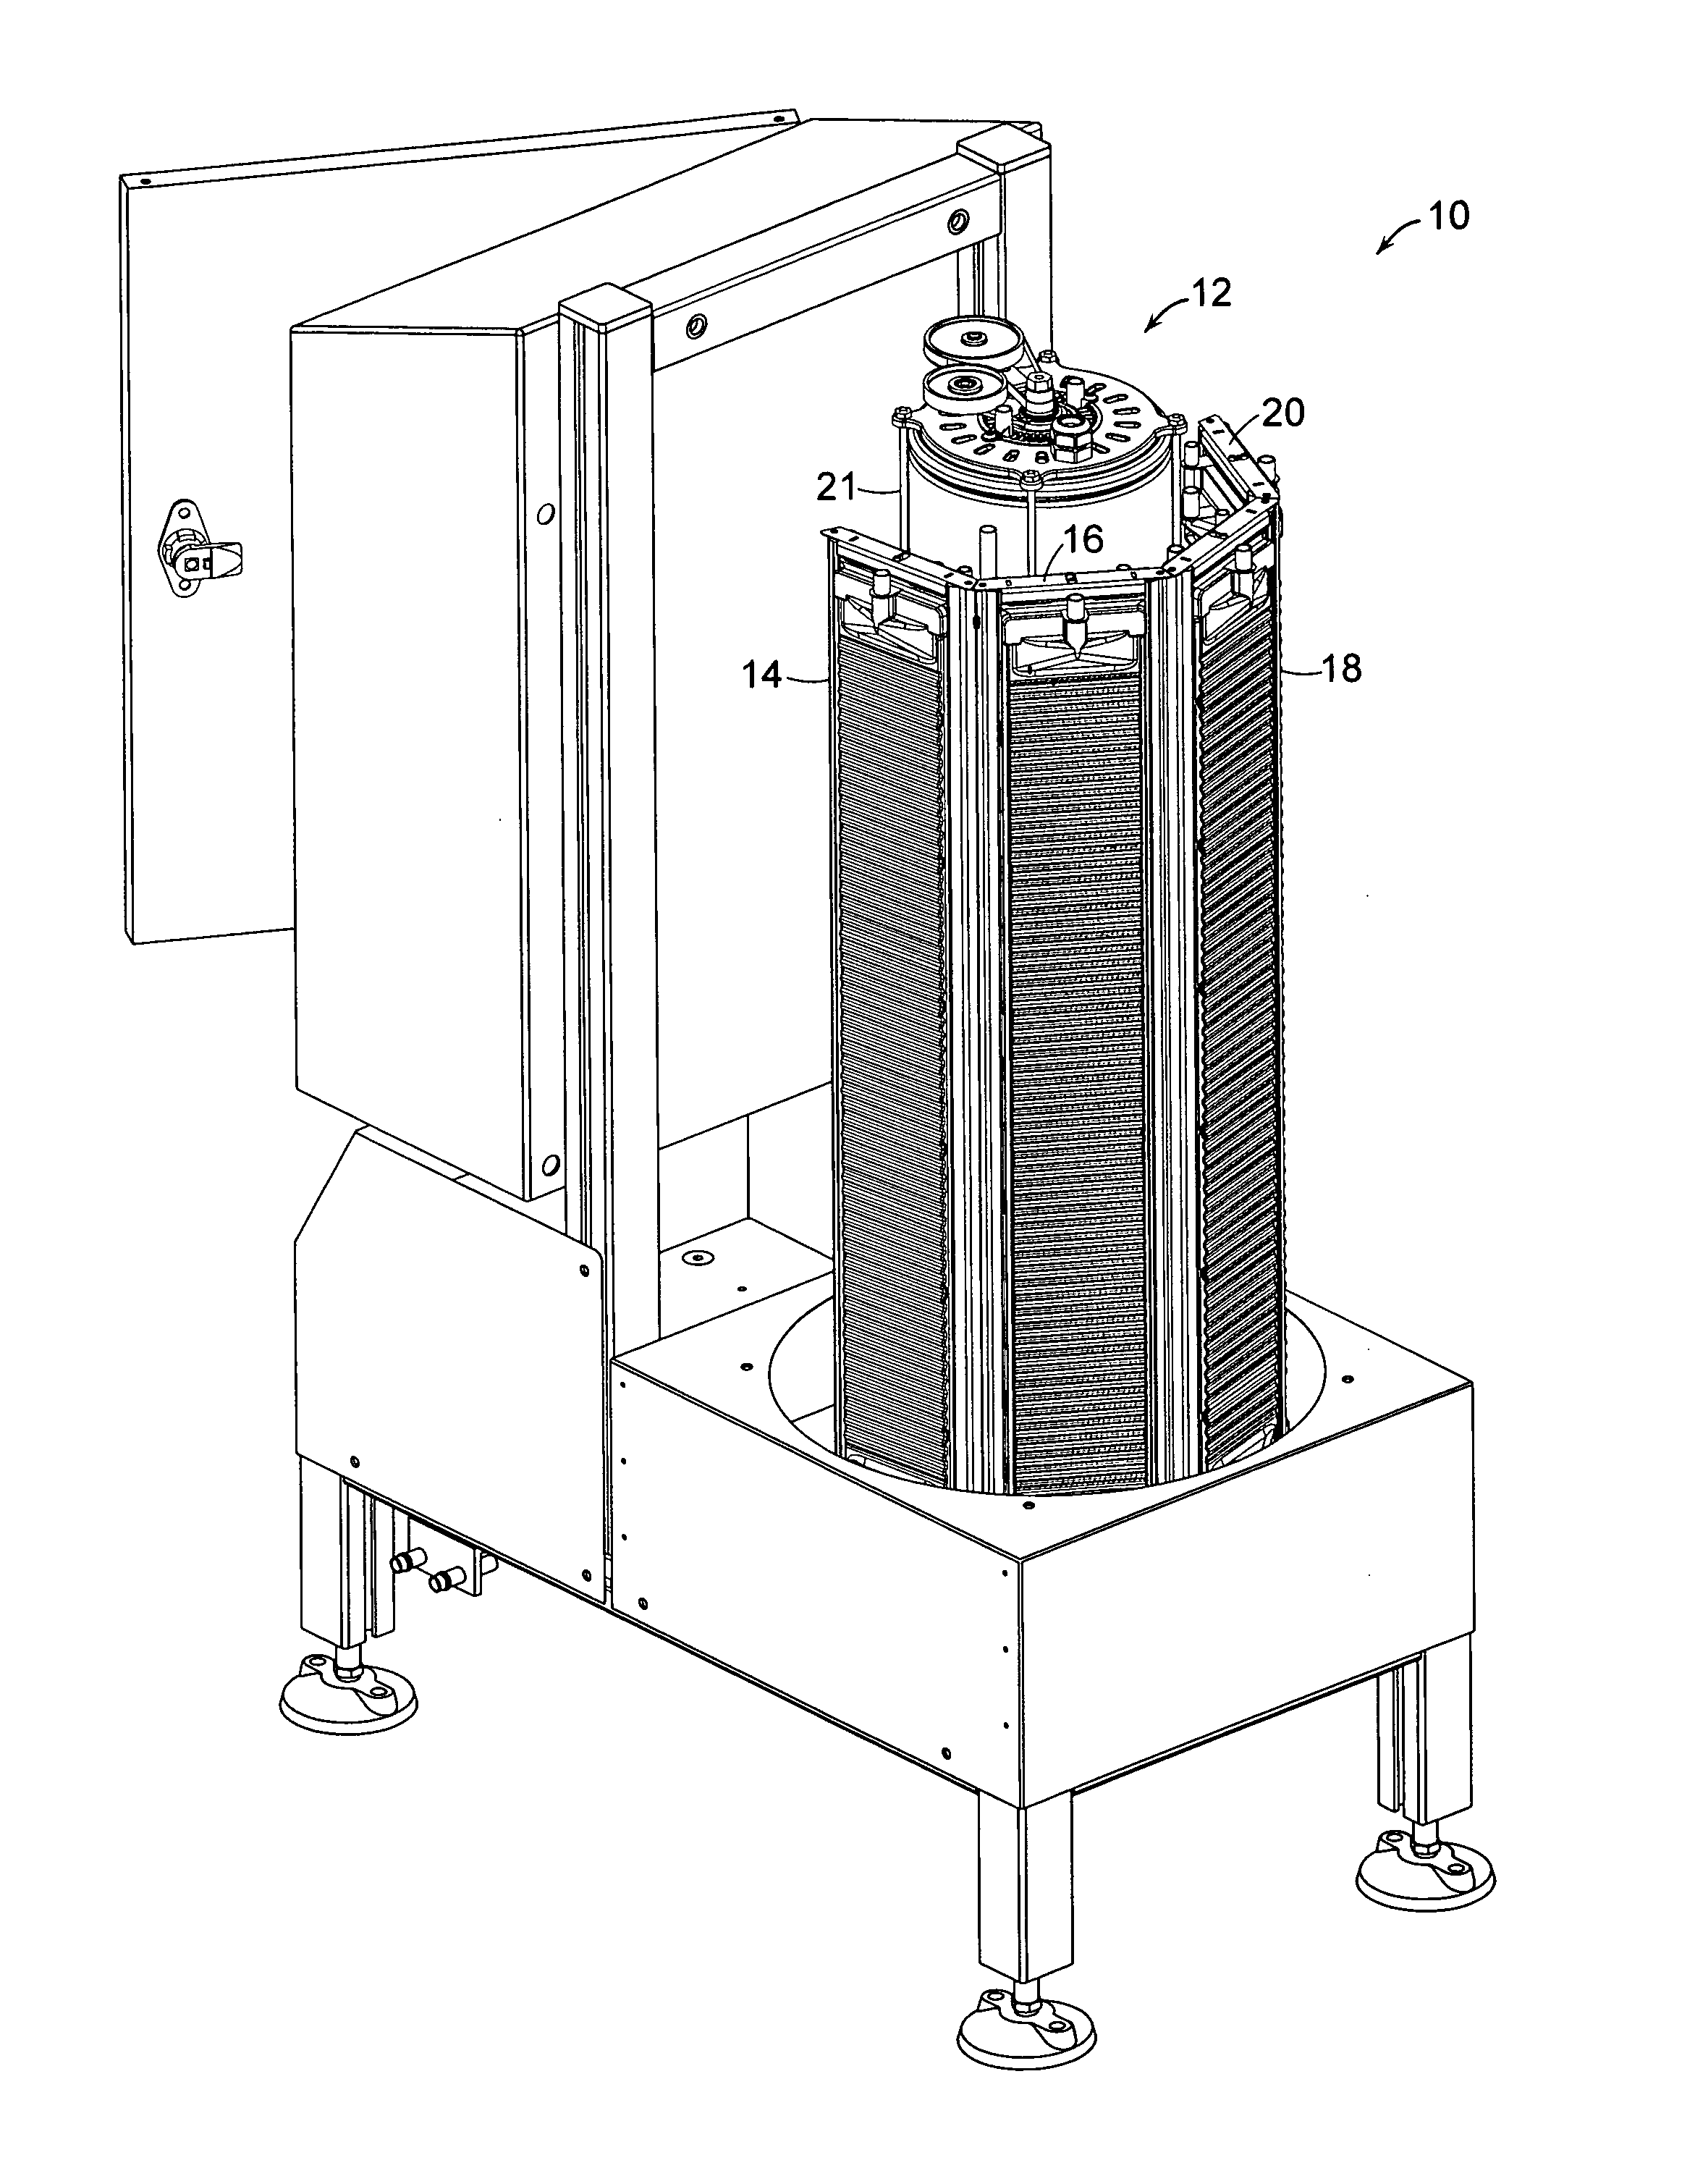 Heat-exchanger sealing